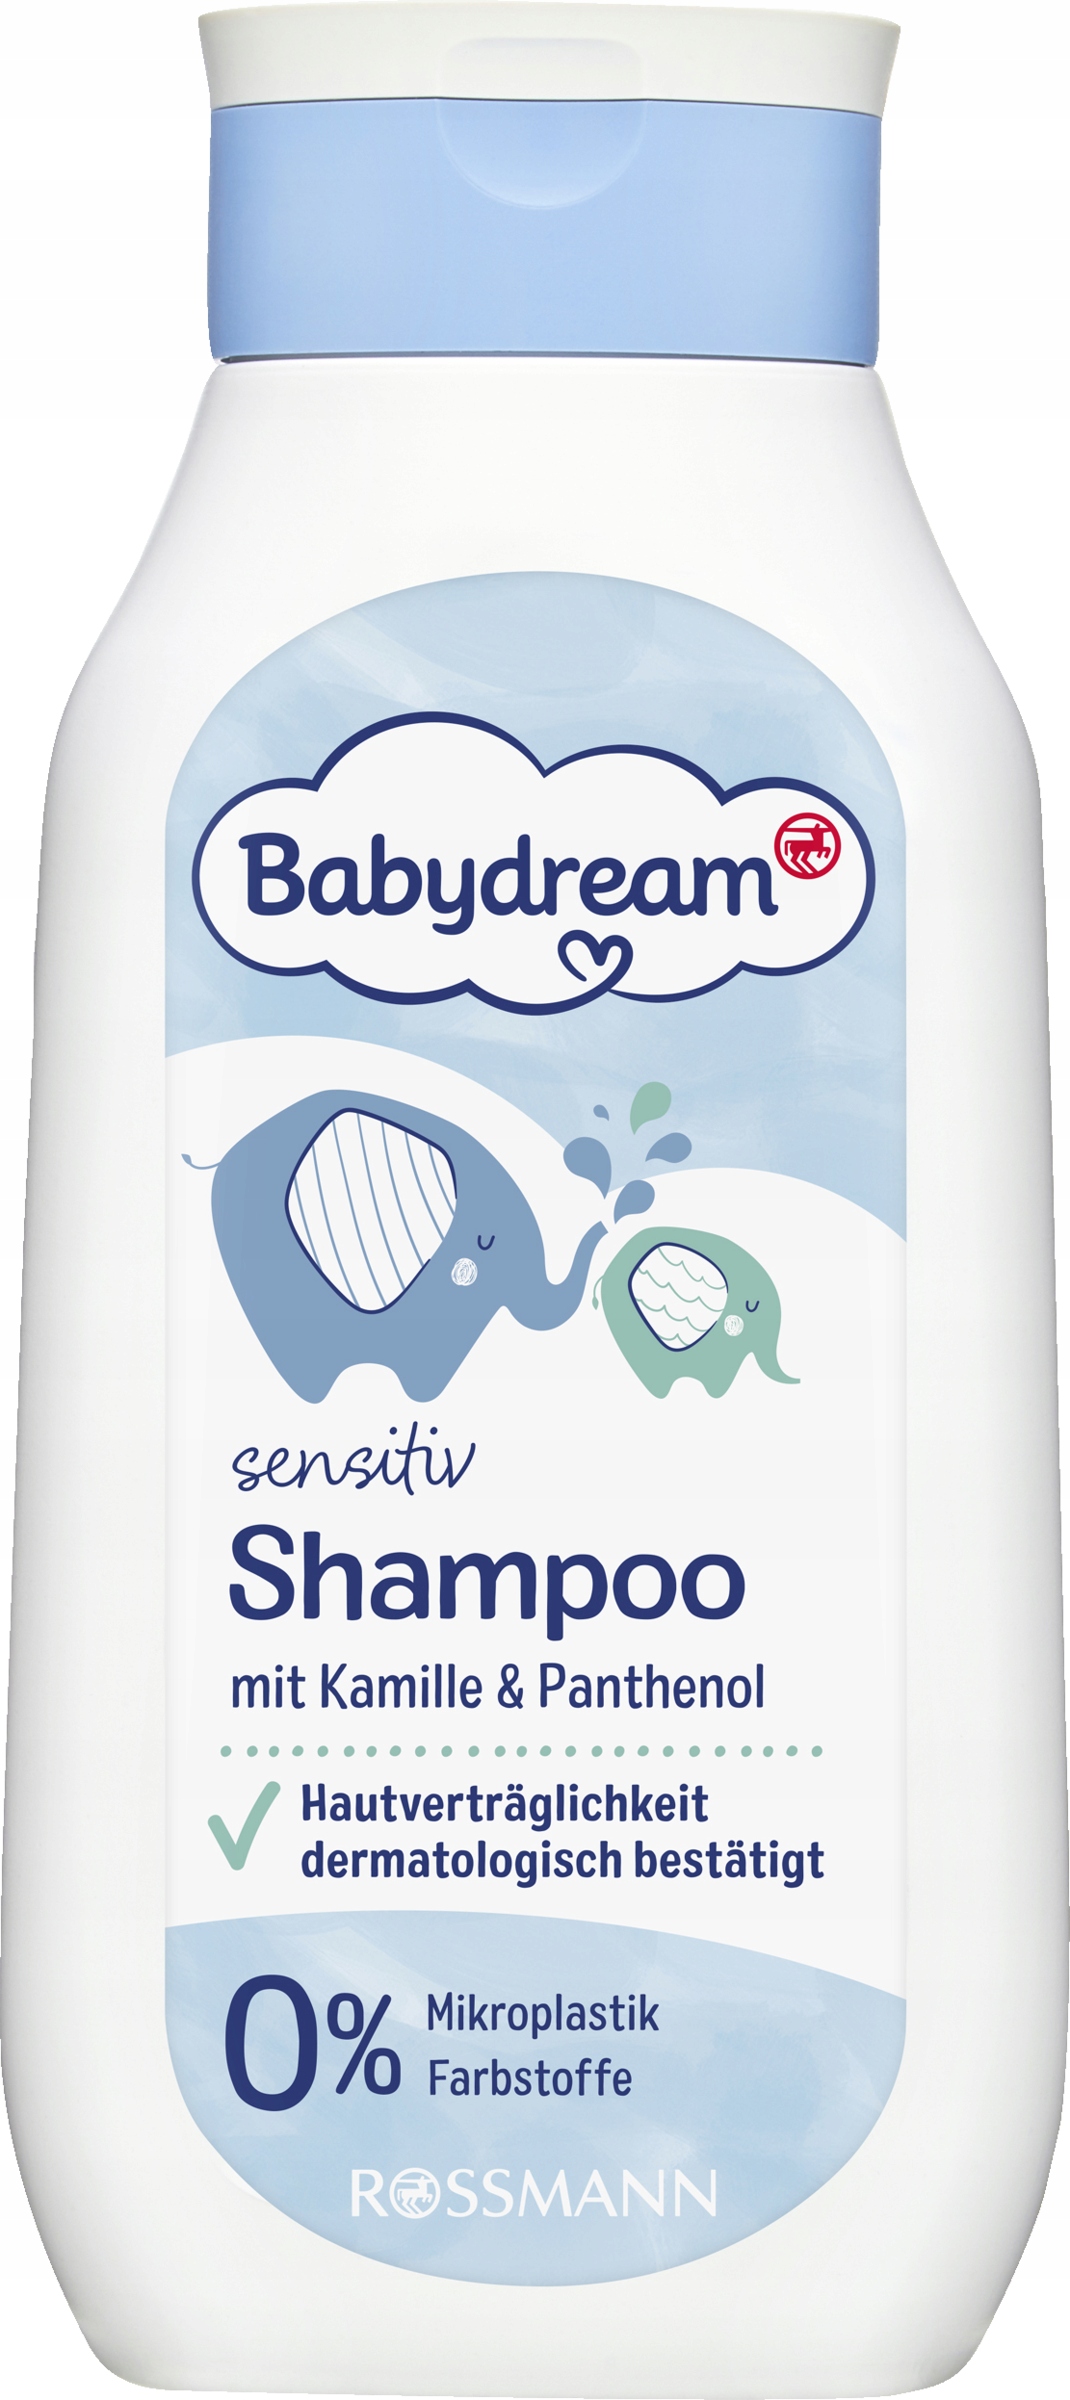 szampon z babydream